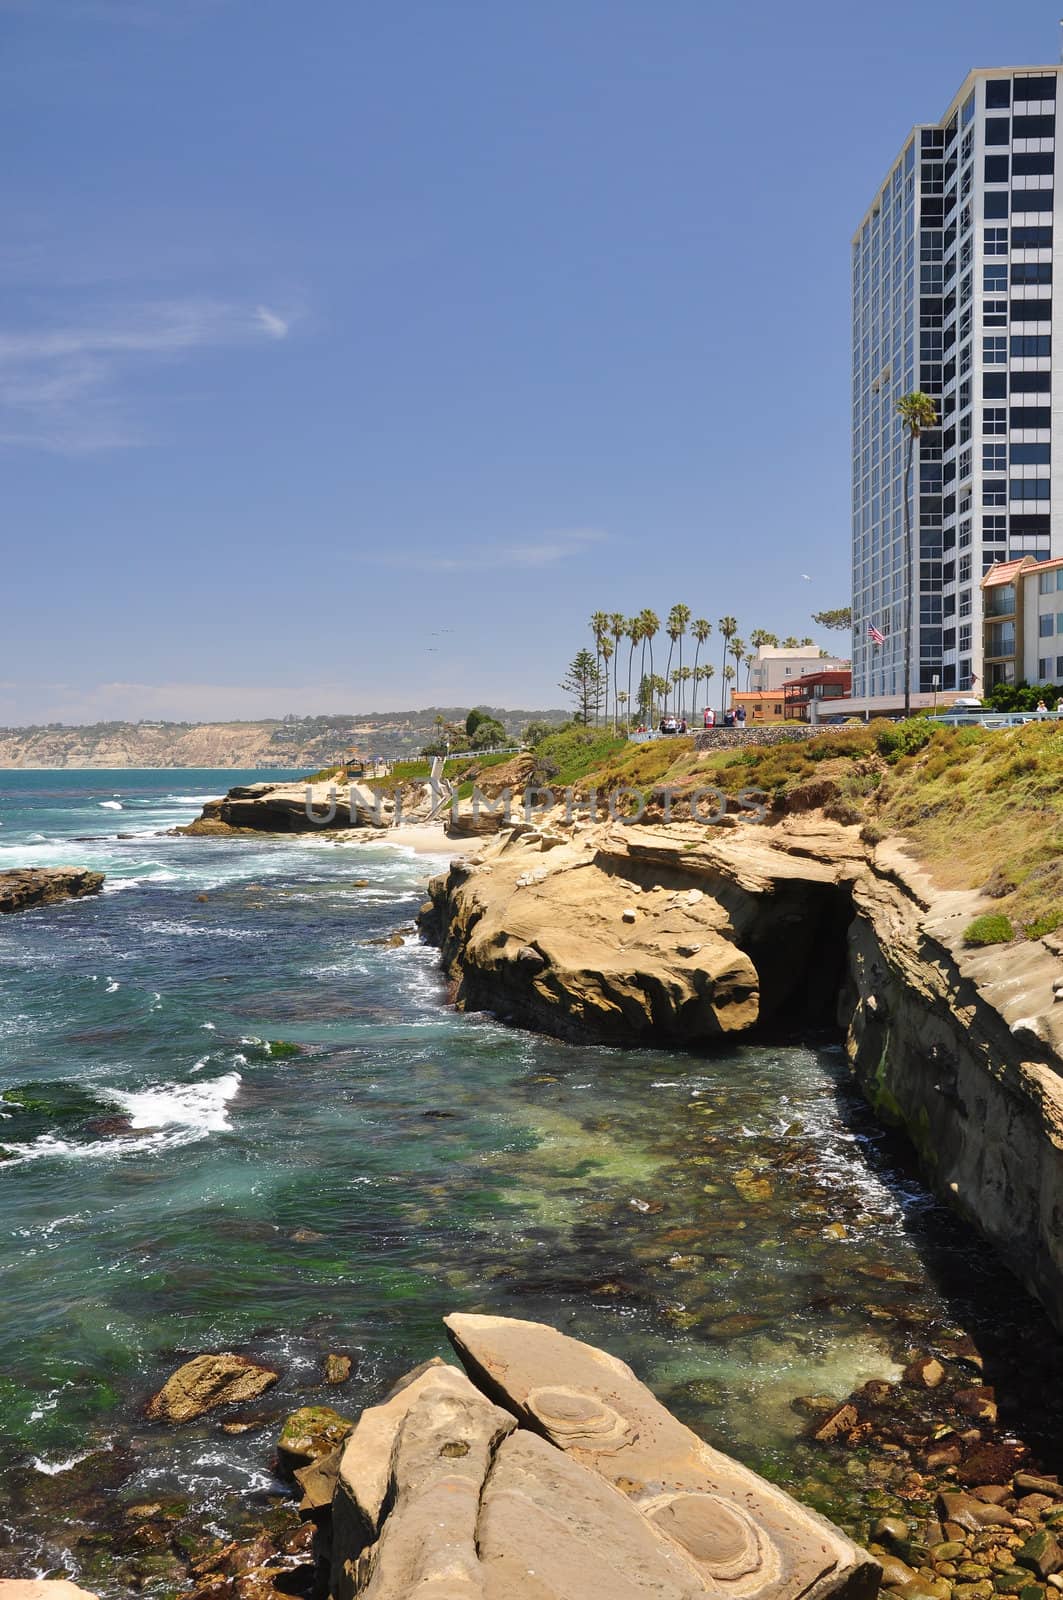 View of the rocky waterfront of La Jolla, California near San Diego.